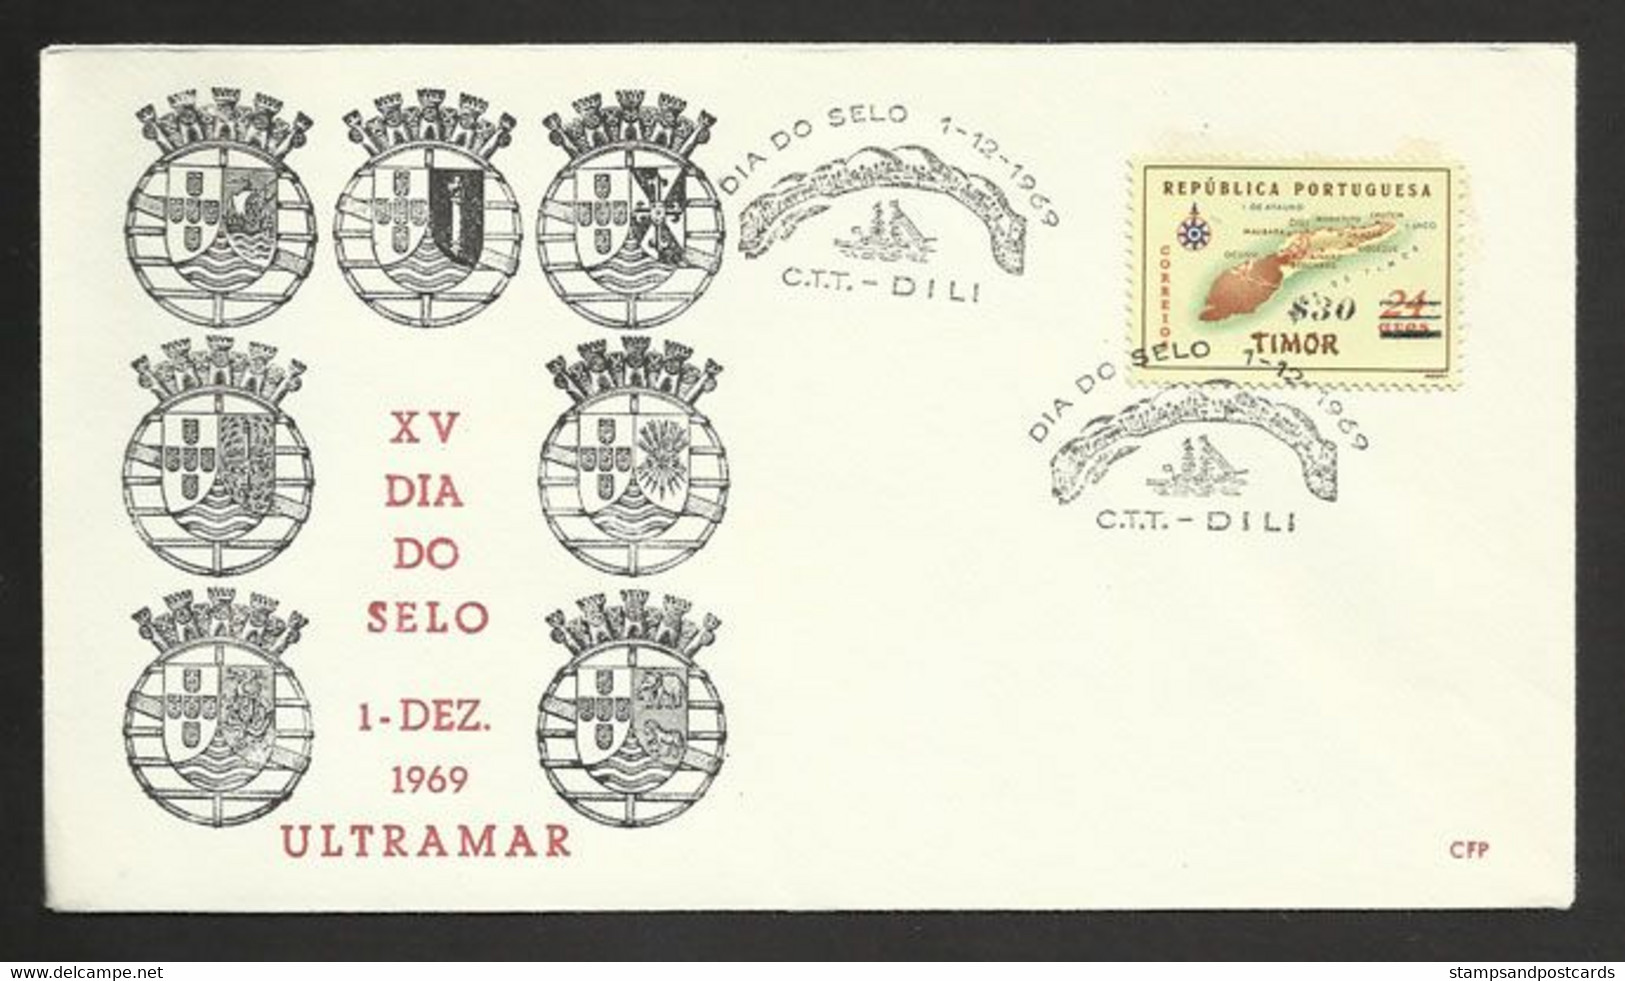 Timor Oriental Portugal Cachet Commémoratif Journée Du Timbre 1969 East Timor Event Postmark Stamp Day - East Timor